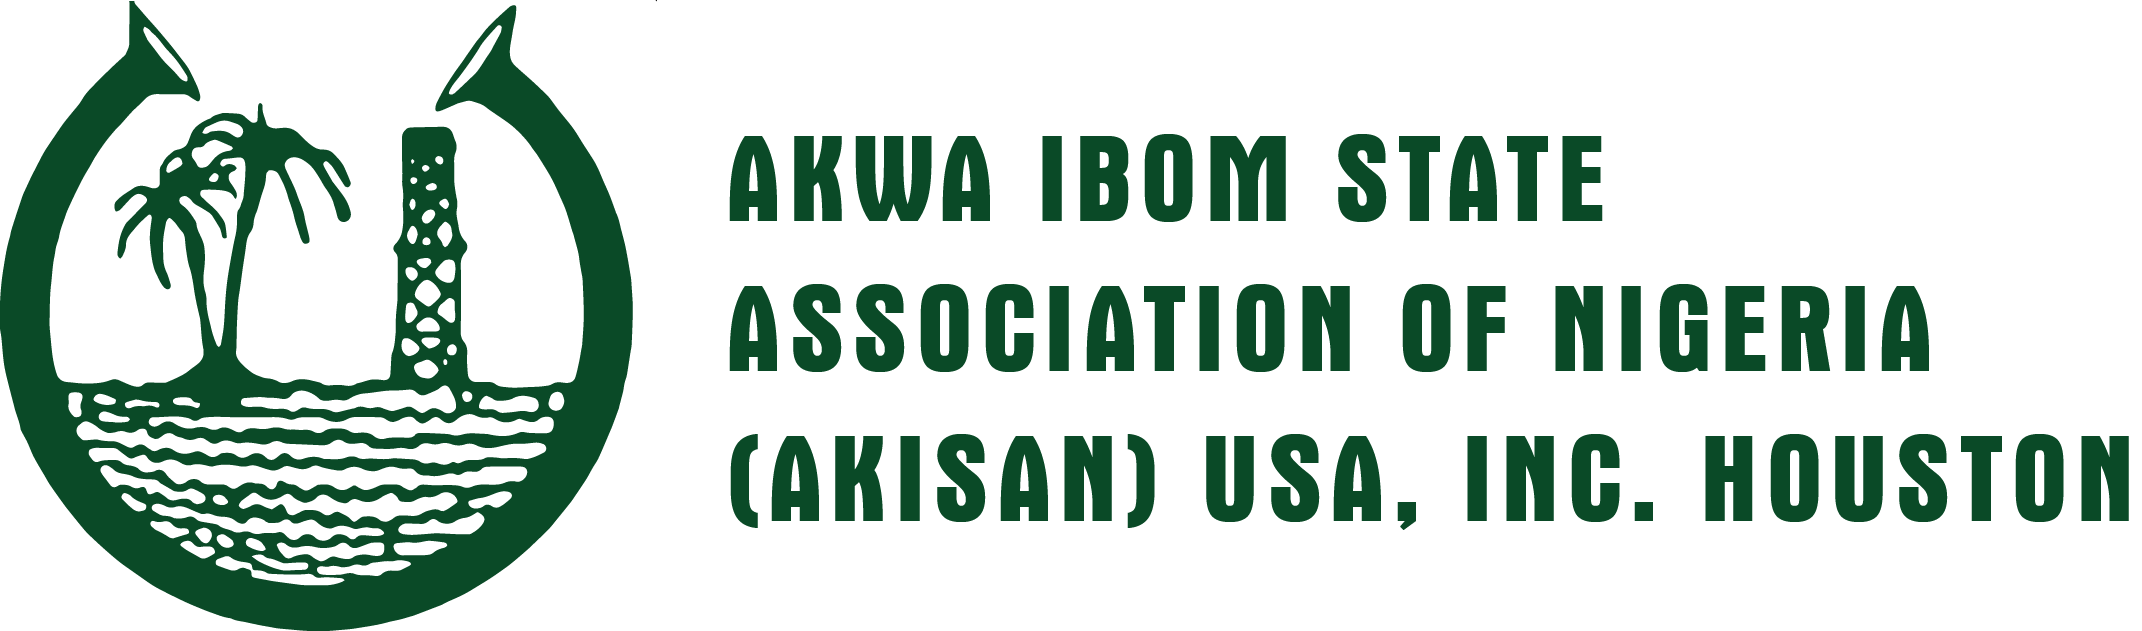 Akwa Ibom State Association of Nigeria (AKISAN), USA, Inc. Houston Chapter.